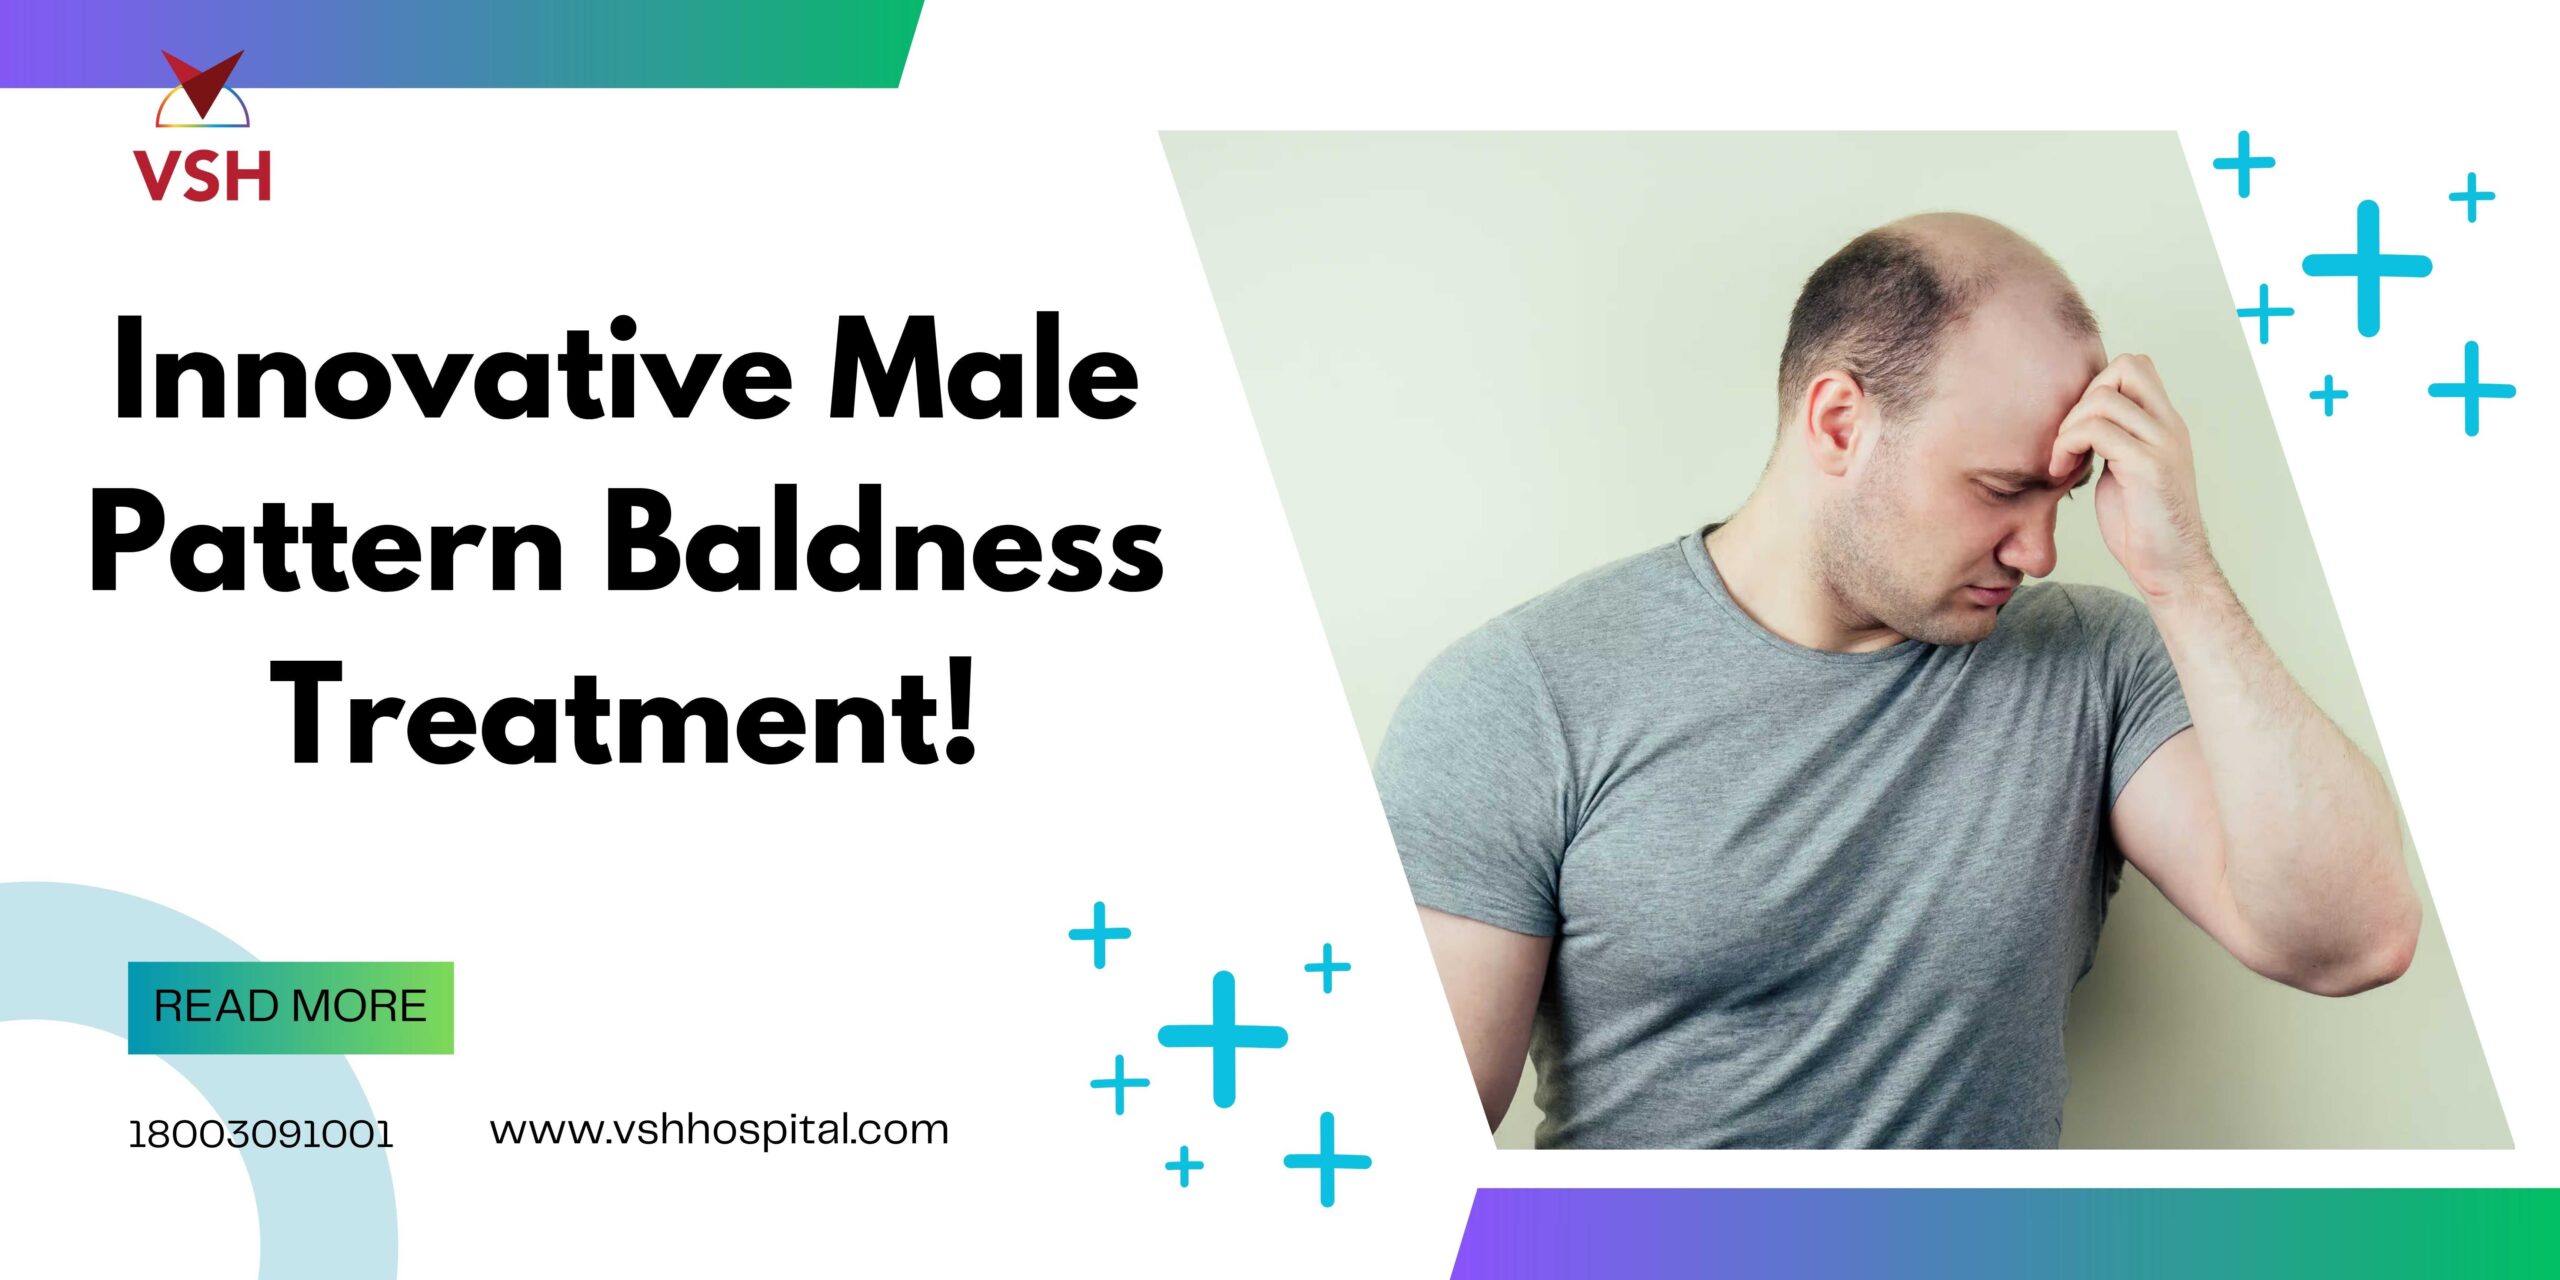 baldness treatment in Bangalore